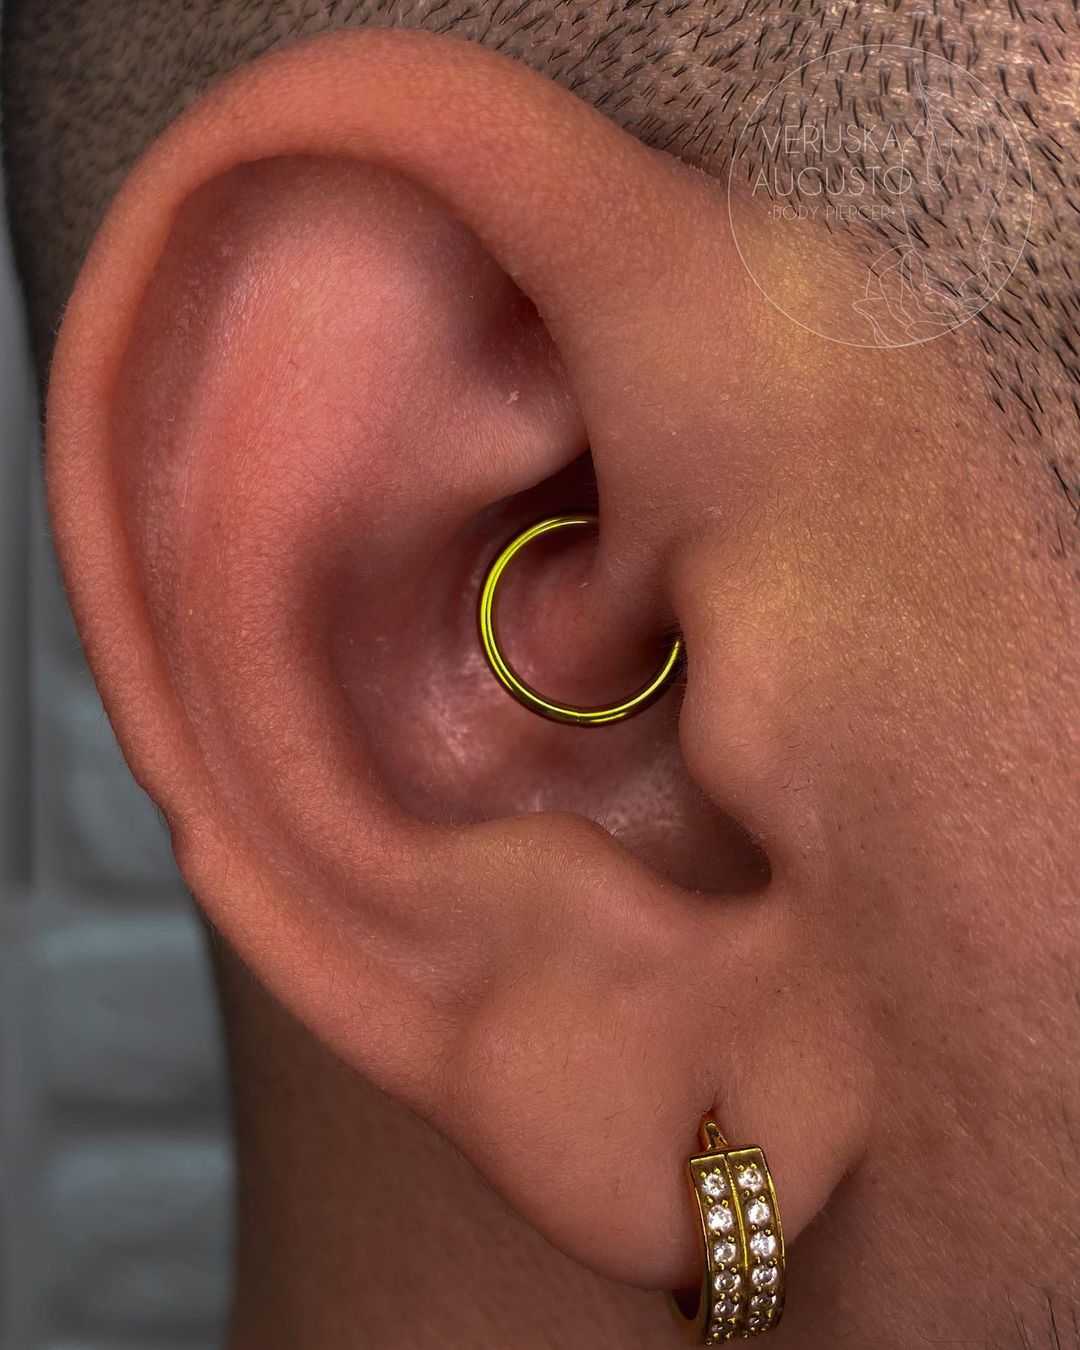 34 Types of Ear Piercings to Try in 2022 - Hairstylery